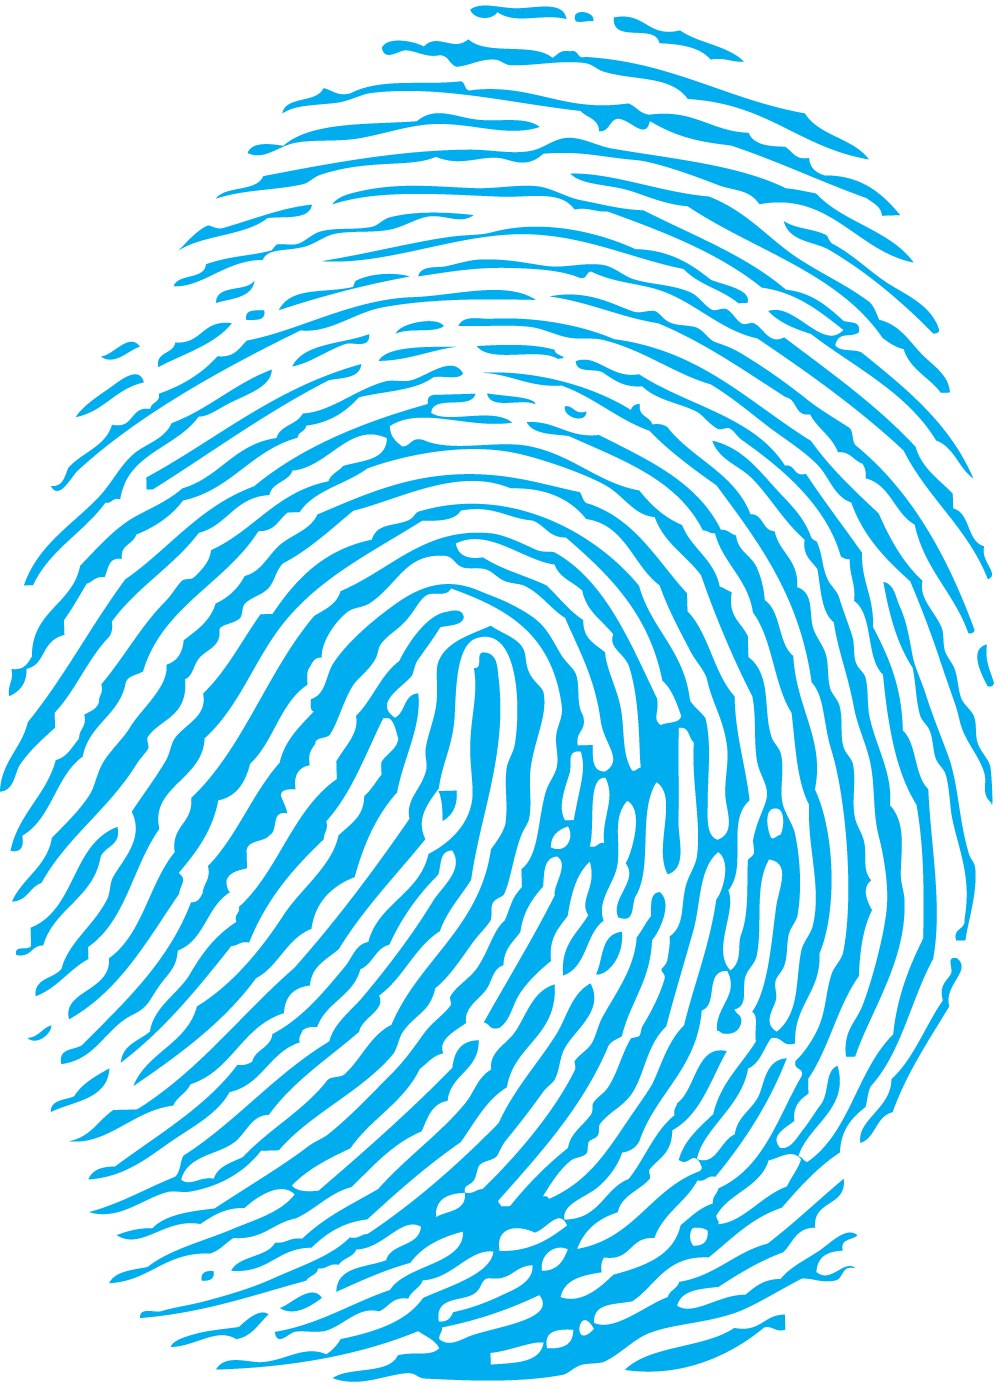 Fingerprint Jpg Icon By Dontstealmyinfo On Deviantart Png Transparent Background Free Download 5909 Freeiconspng